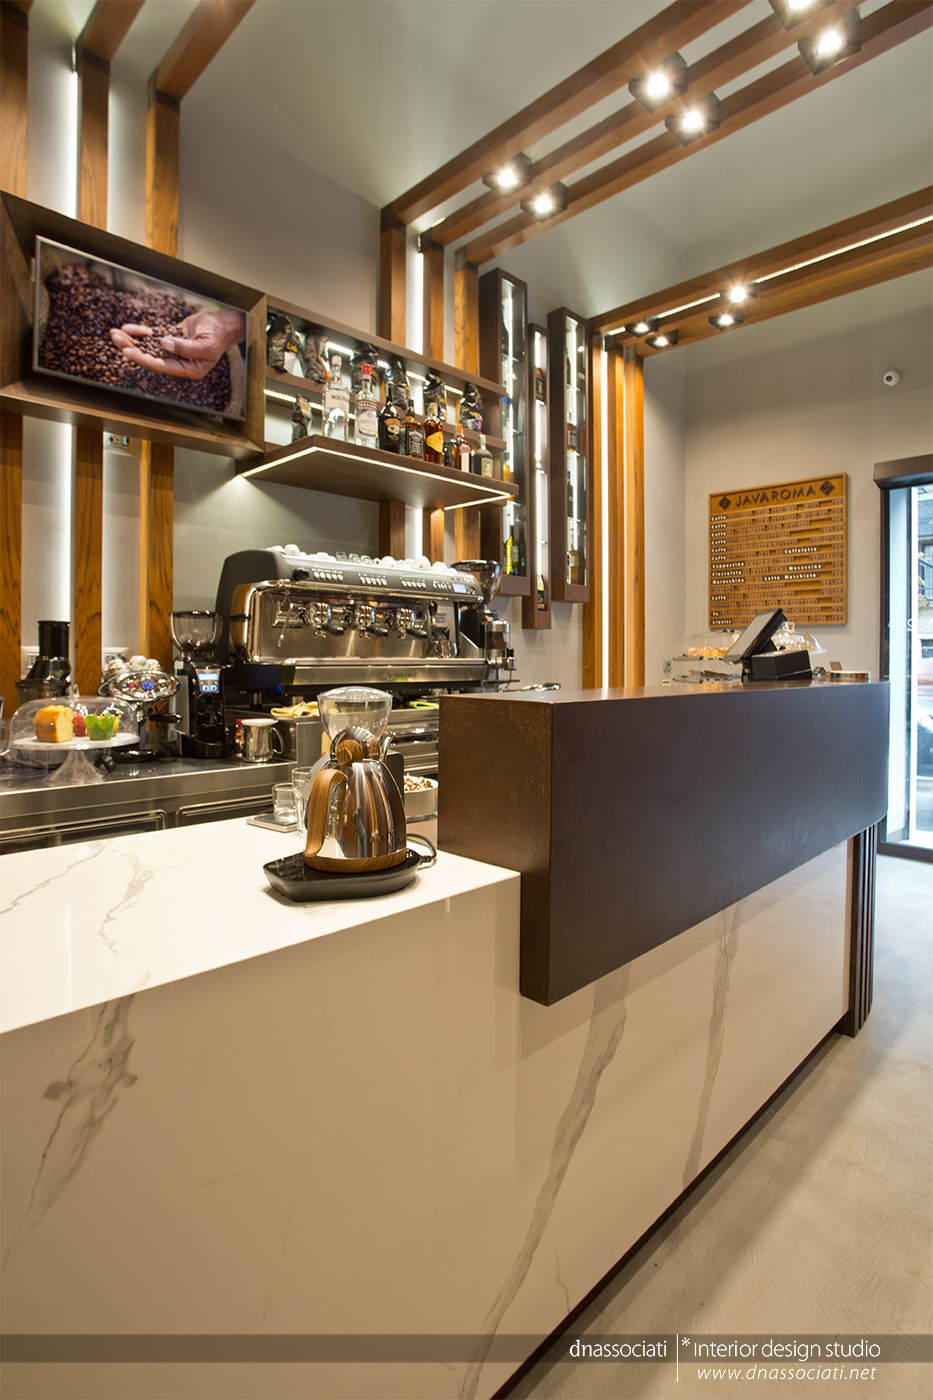 DNAssociati Interior Designer - Caffe Javaroma Via XX Settembre Roma - napoli